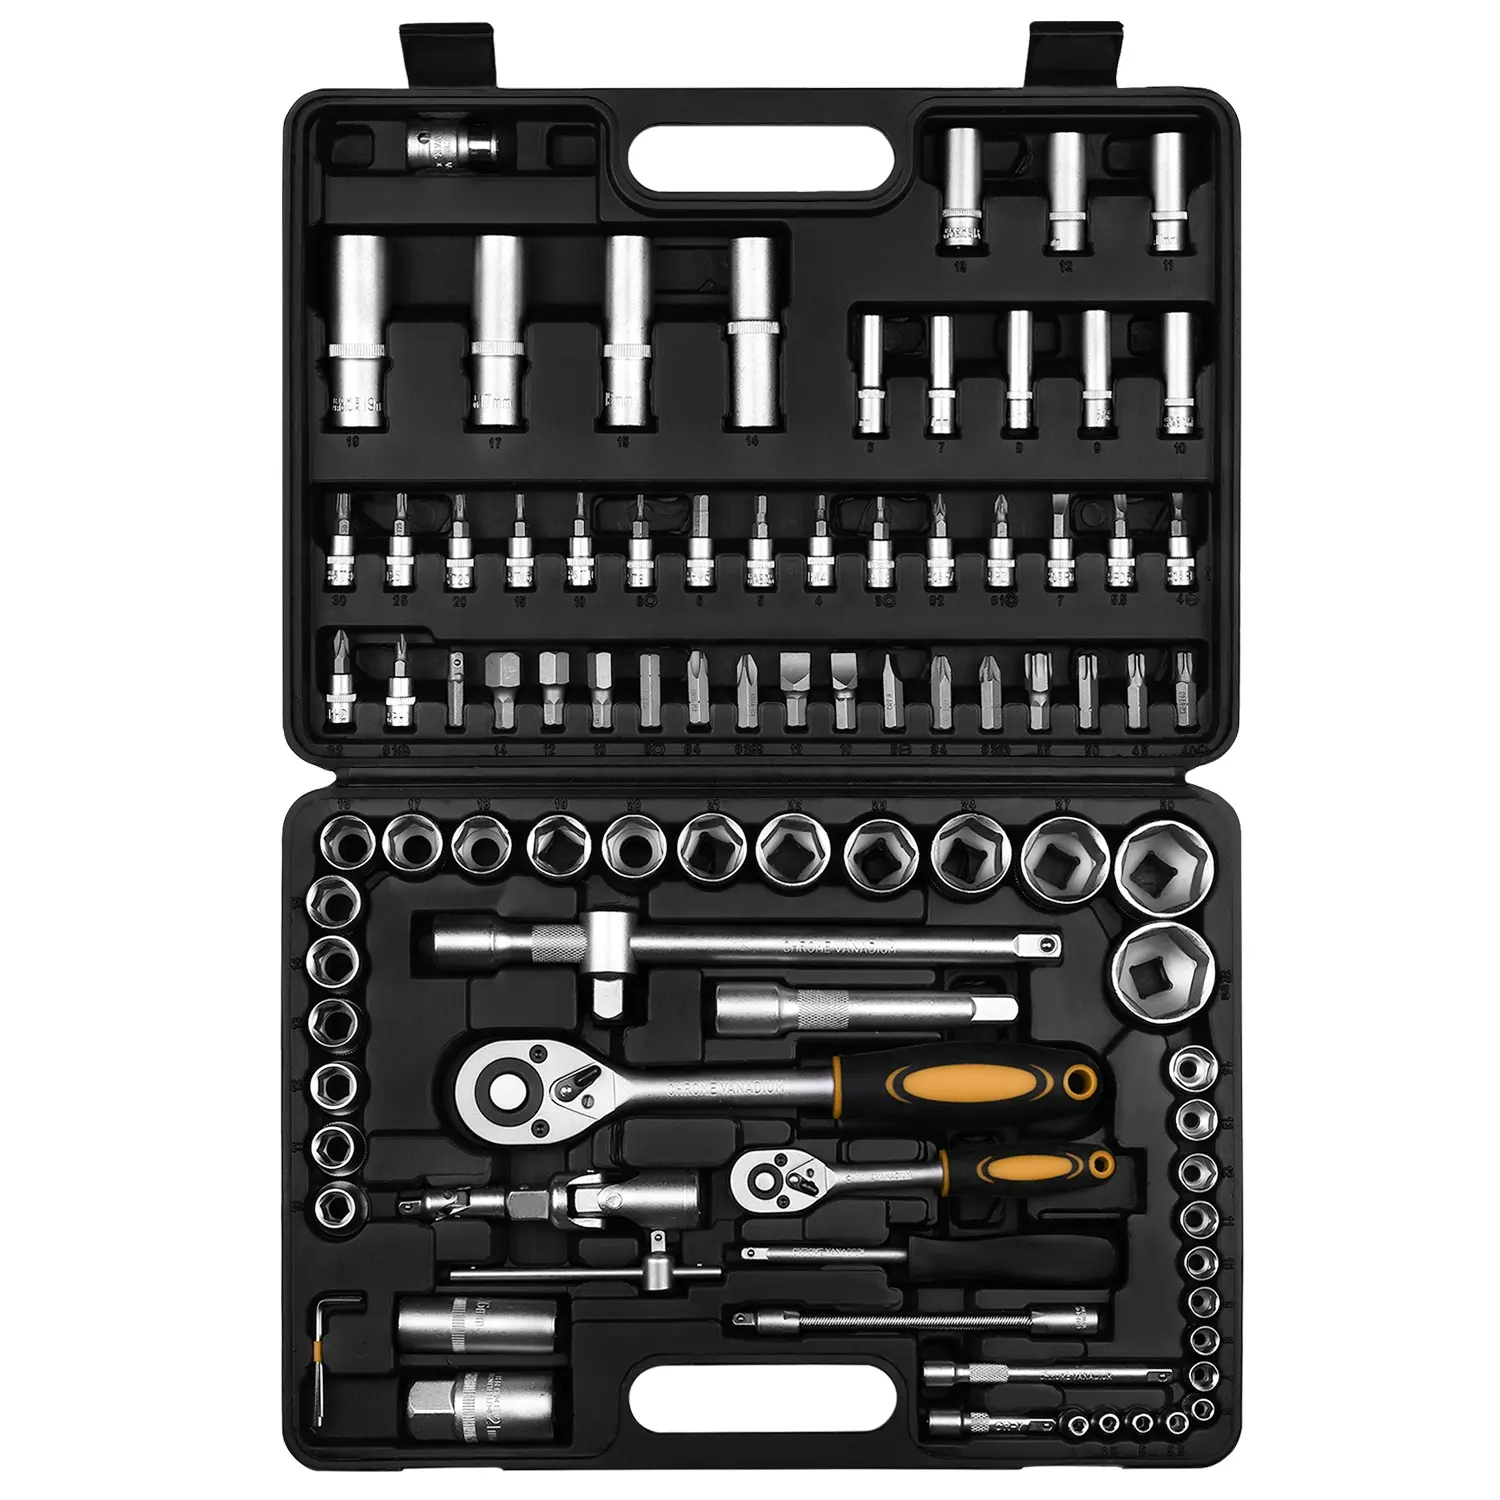 DEKO DKMT94 Box Case Combo Wrench Socket Tool Sets Portable 94pcs Tool Kit For Automotive Car Repairing With Plastic Case